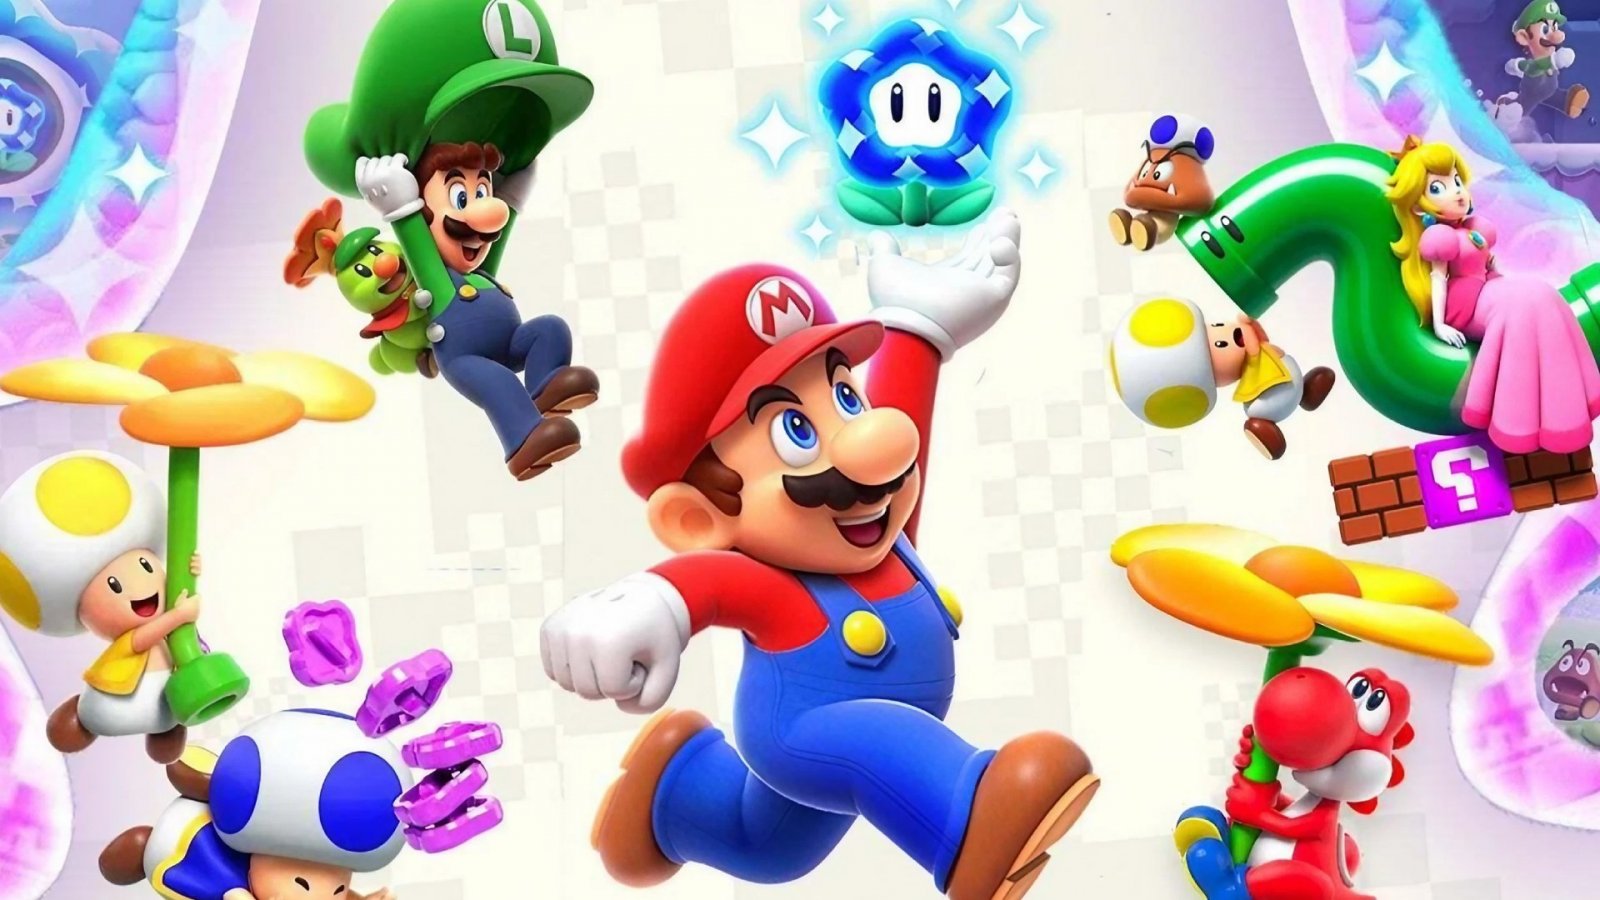 Classifica Nintendo eShop, Super Mario Bros. Wonder è inarrestabile